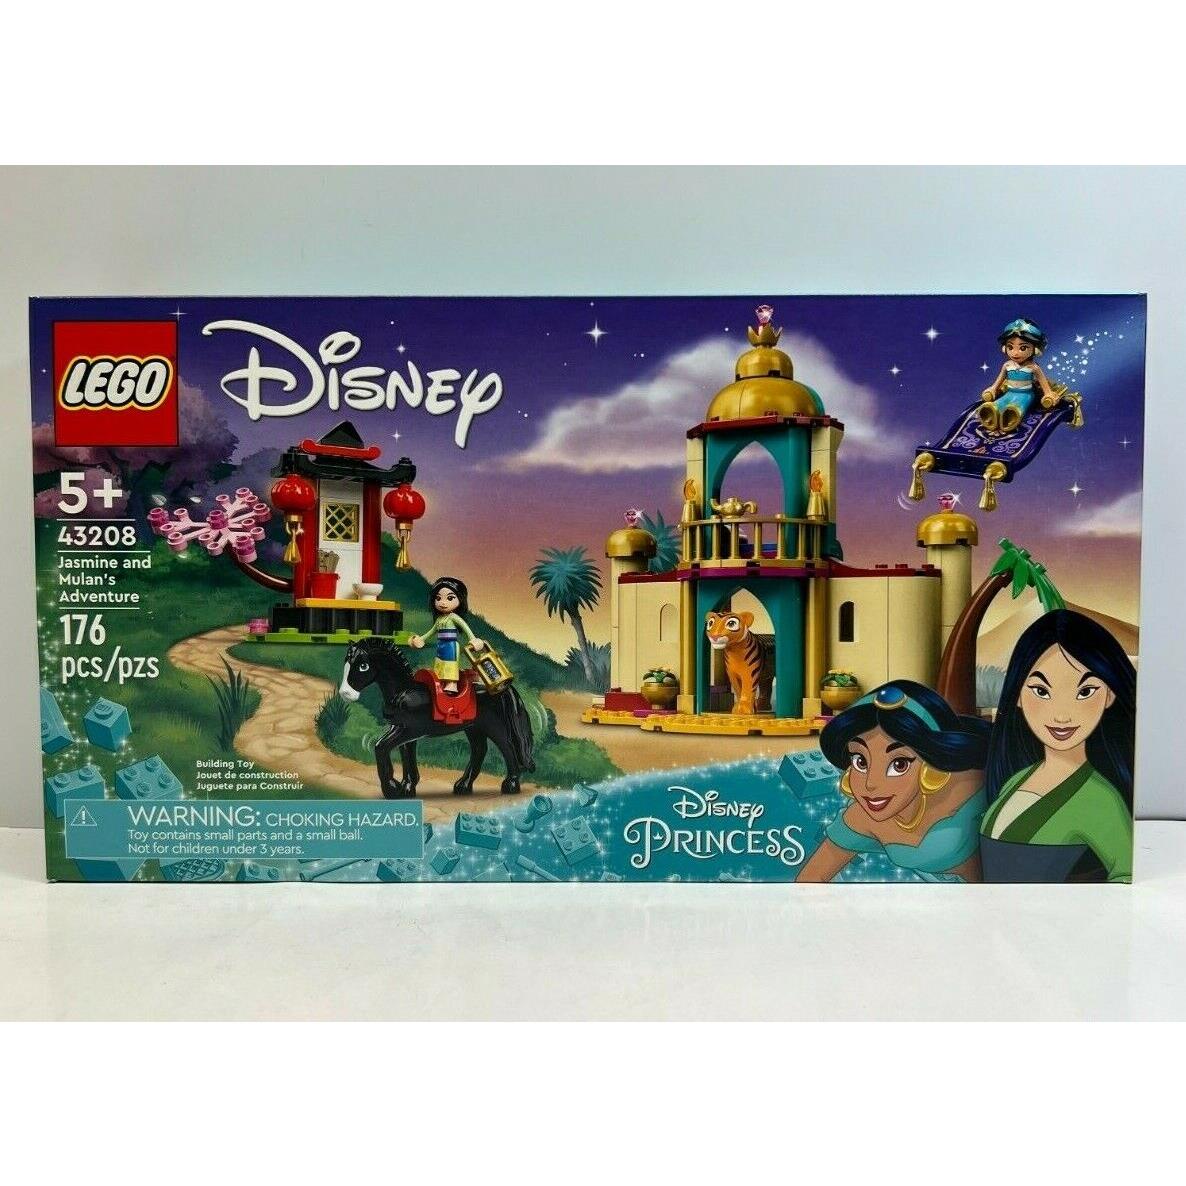 Lego Disney Princess Jasmine and Mulan Adventure 43208 Building Set